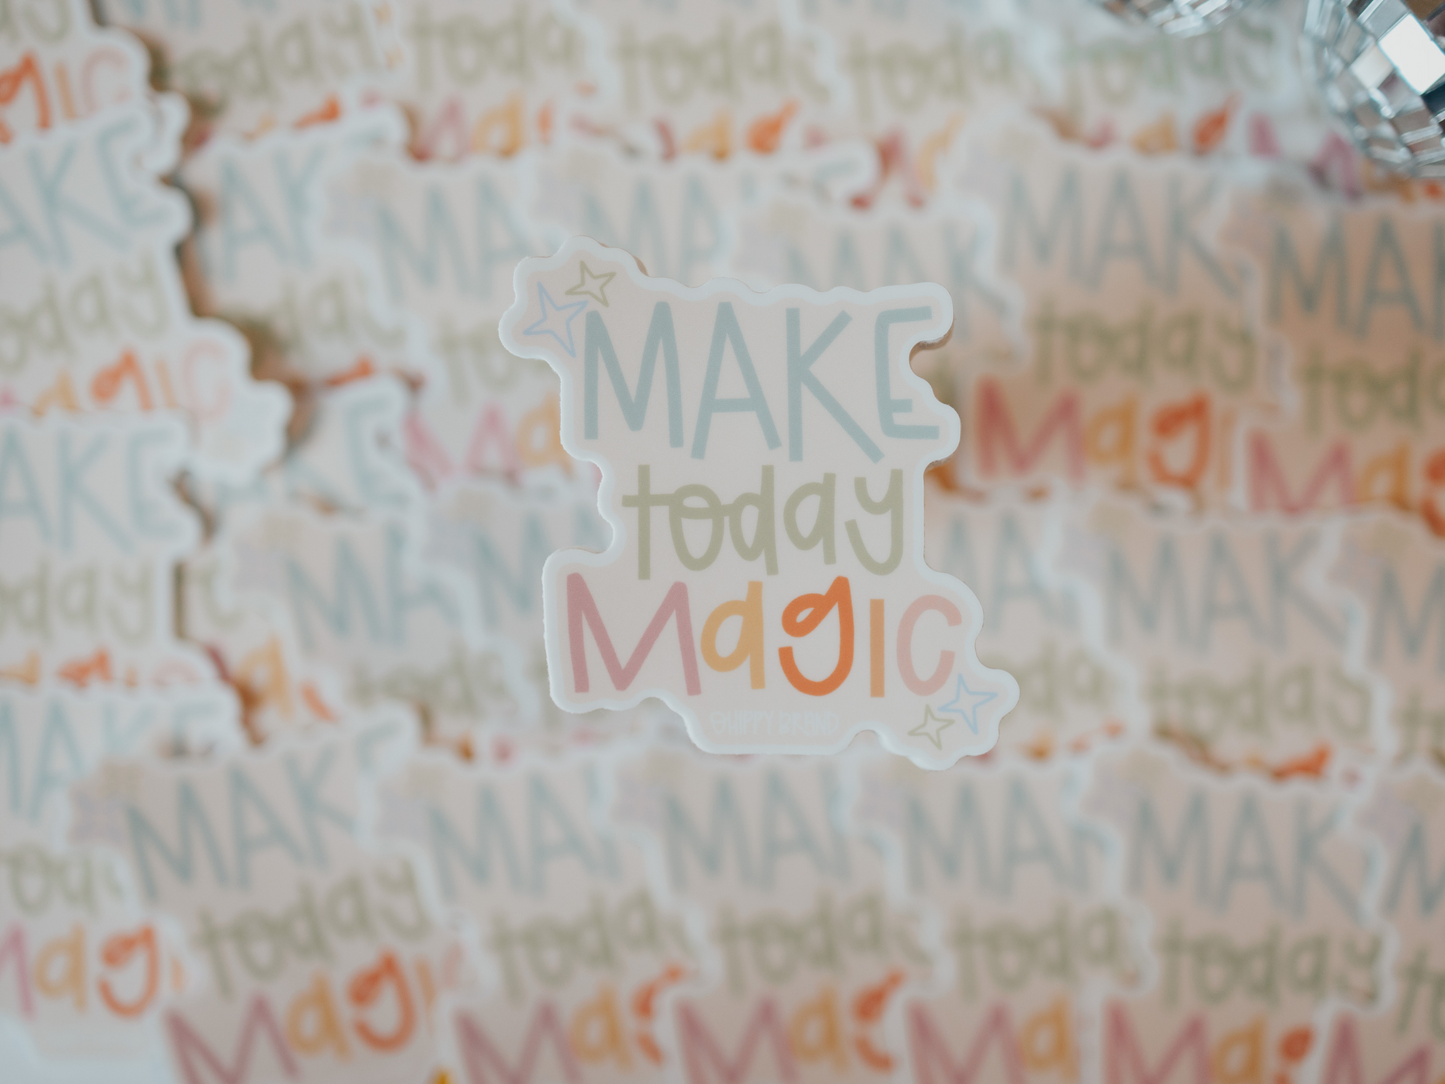 Make today magic sticker.